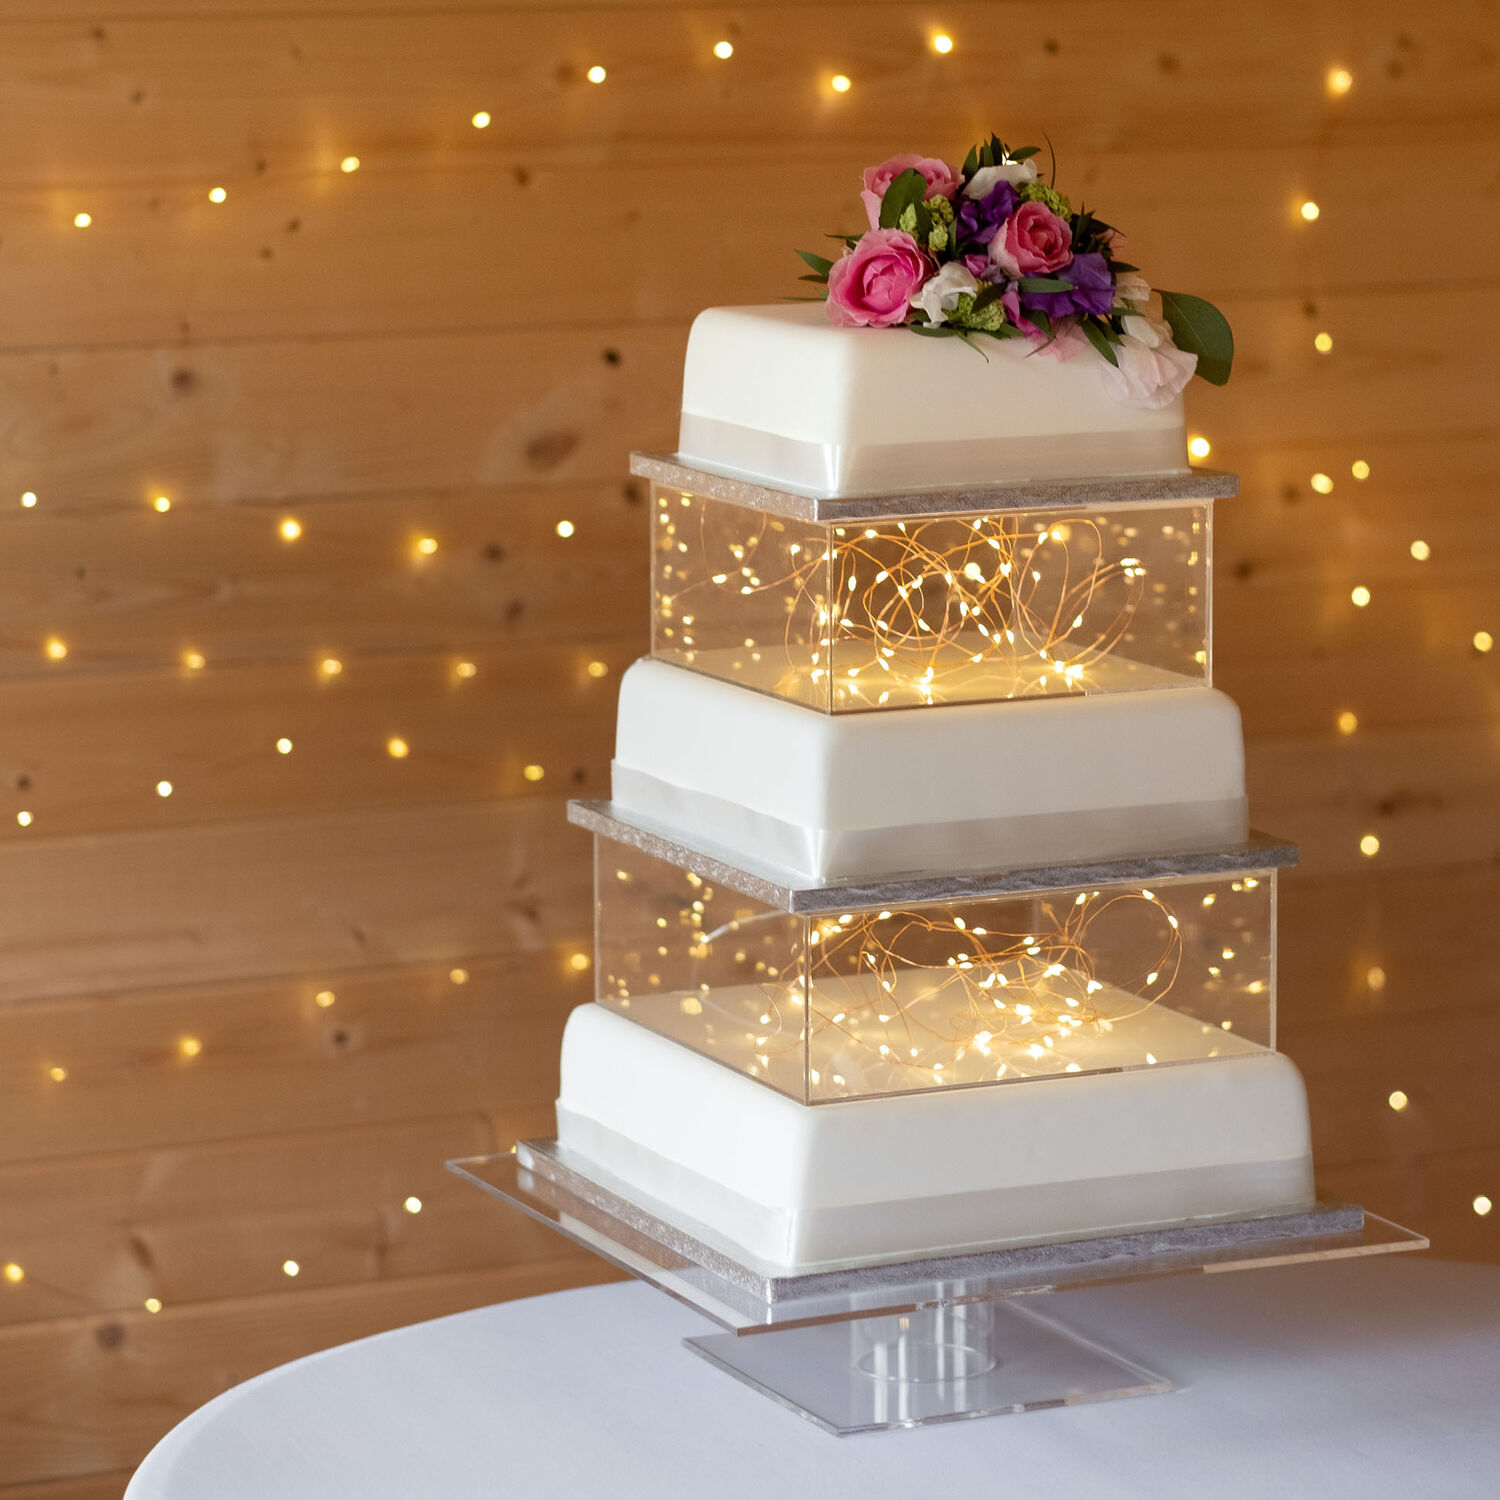 40 Cool Acrylic Separator Wedding Cake Designs - Weddingomania